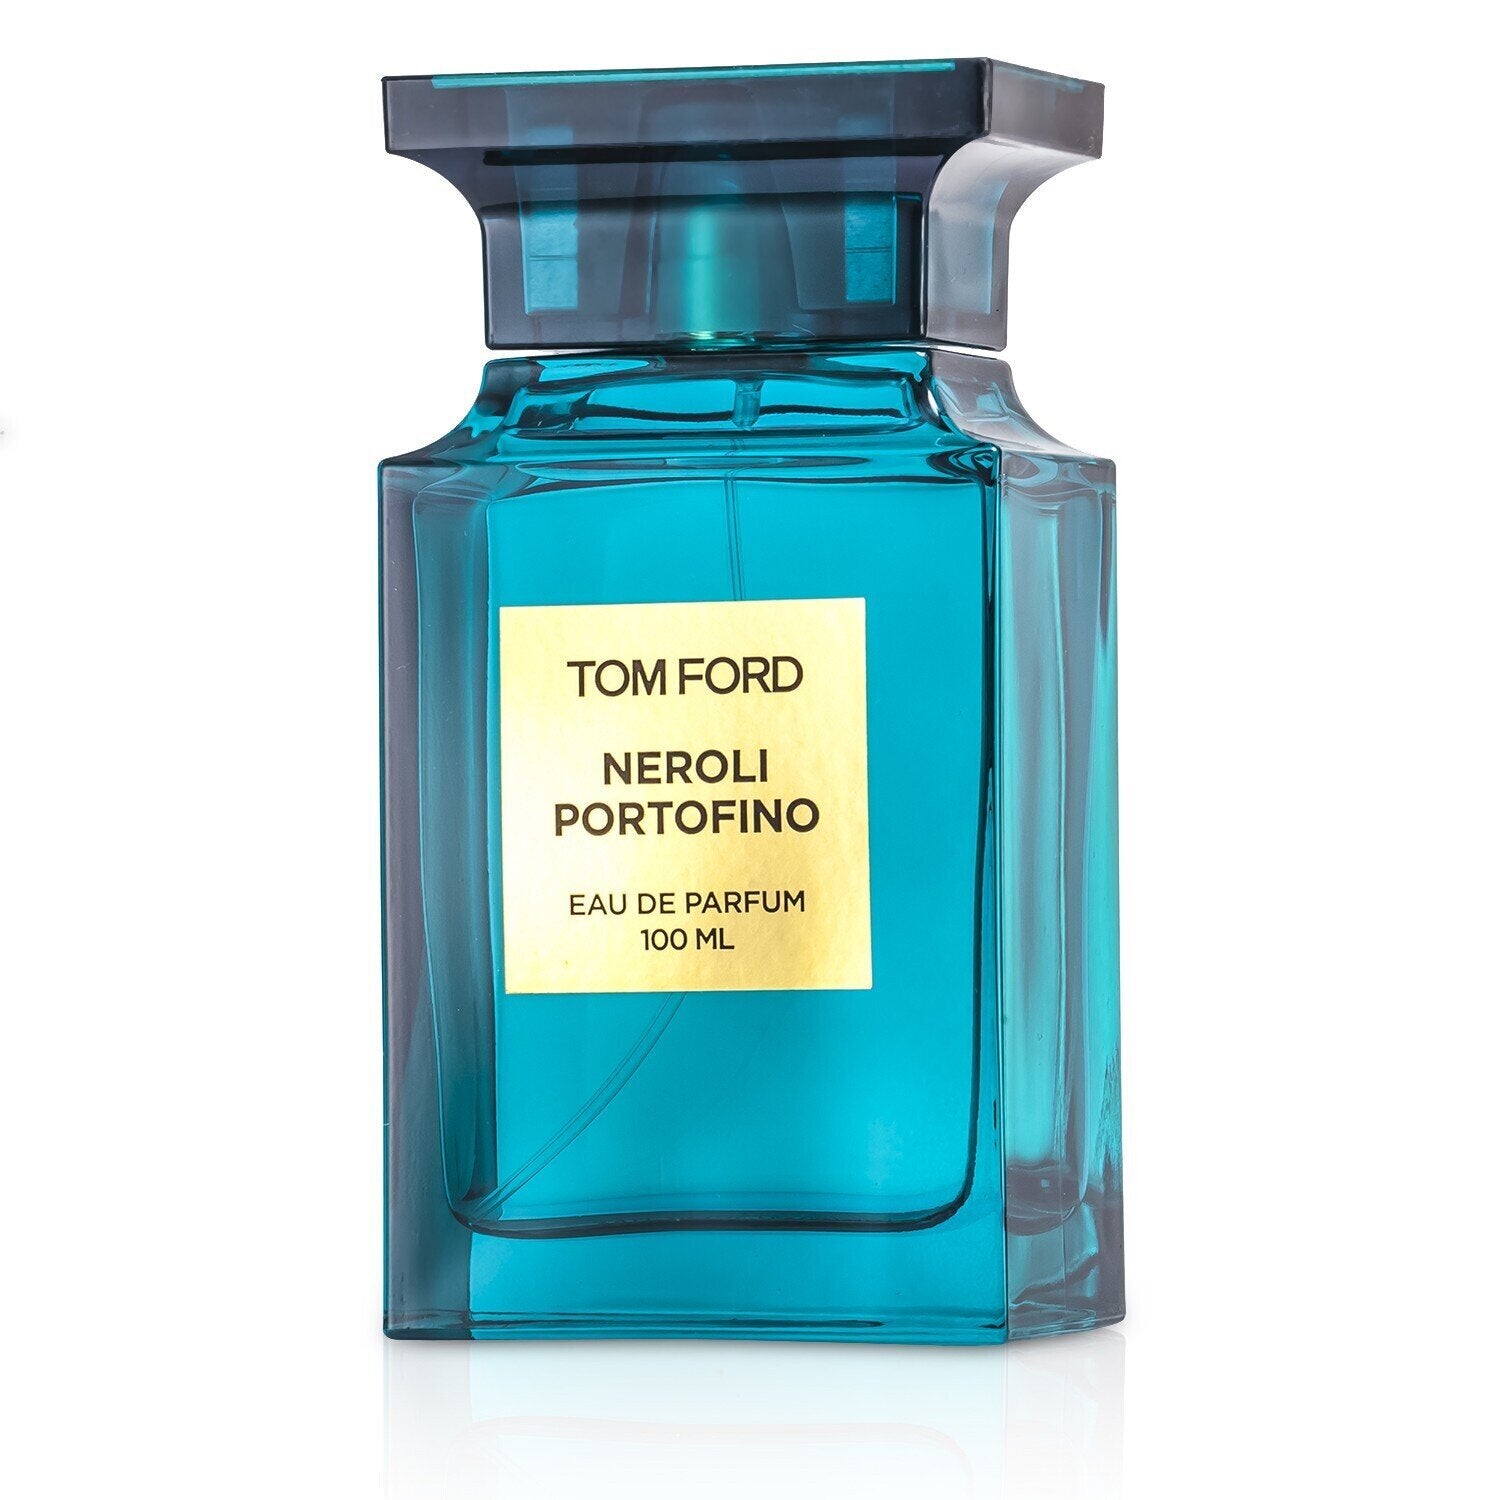 Tom Ford Private Blend Neroli Portofino Eau de Parfum 100ml & 30ml Spray - Peacock Bazaar